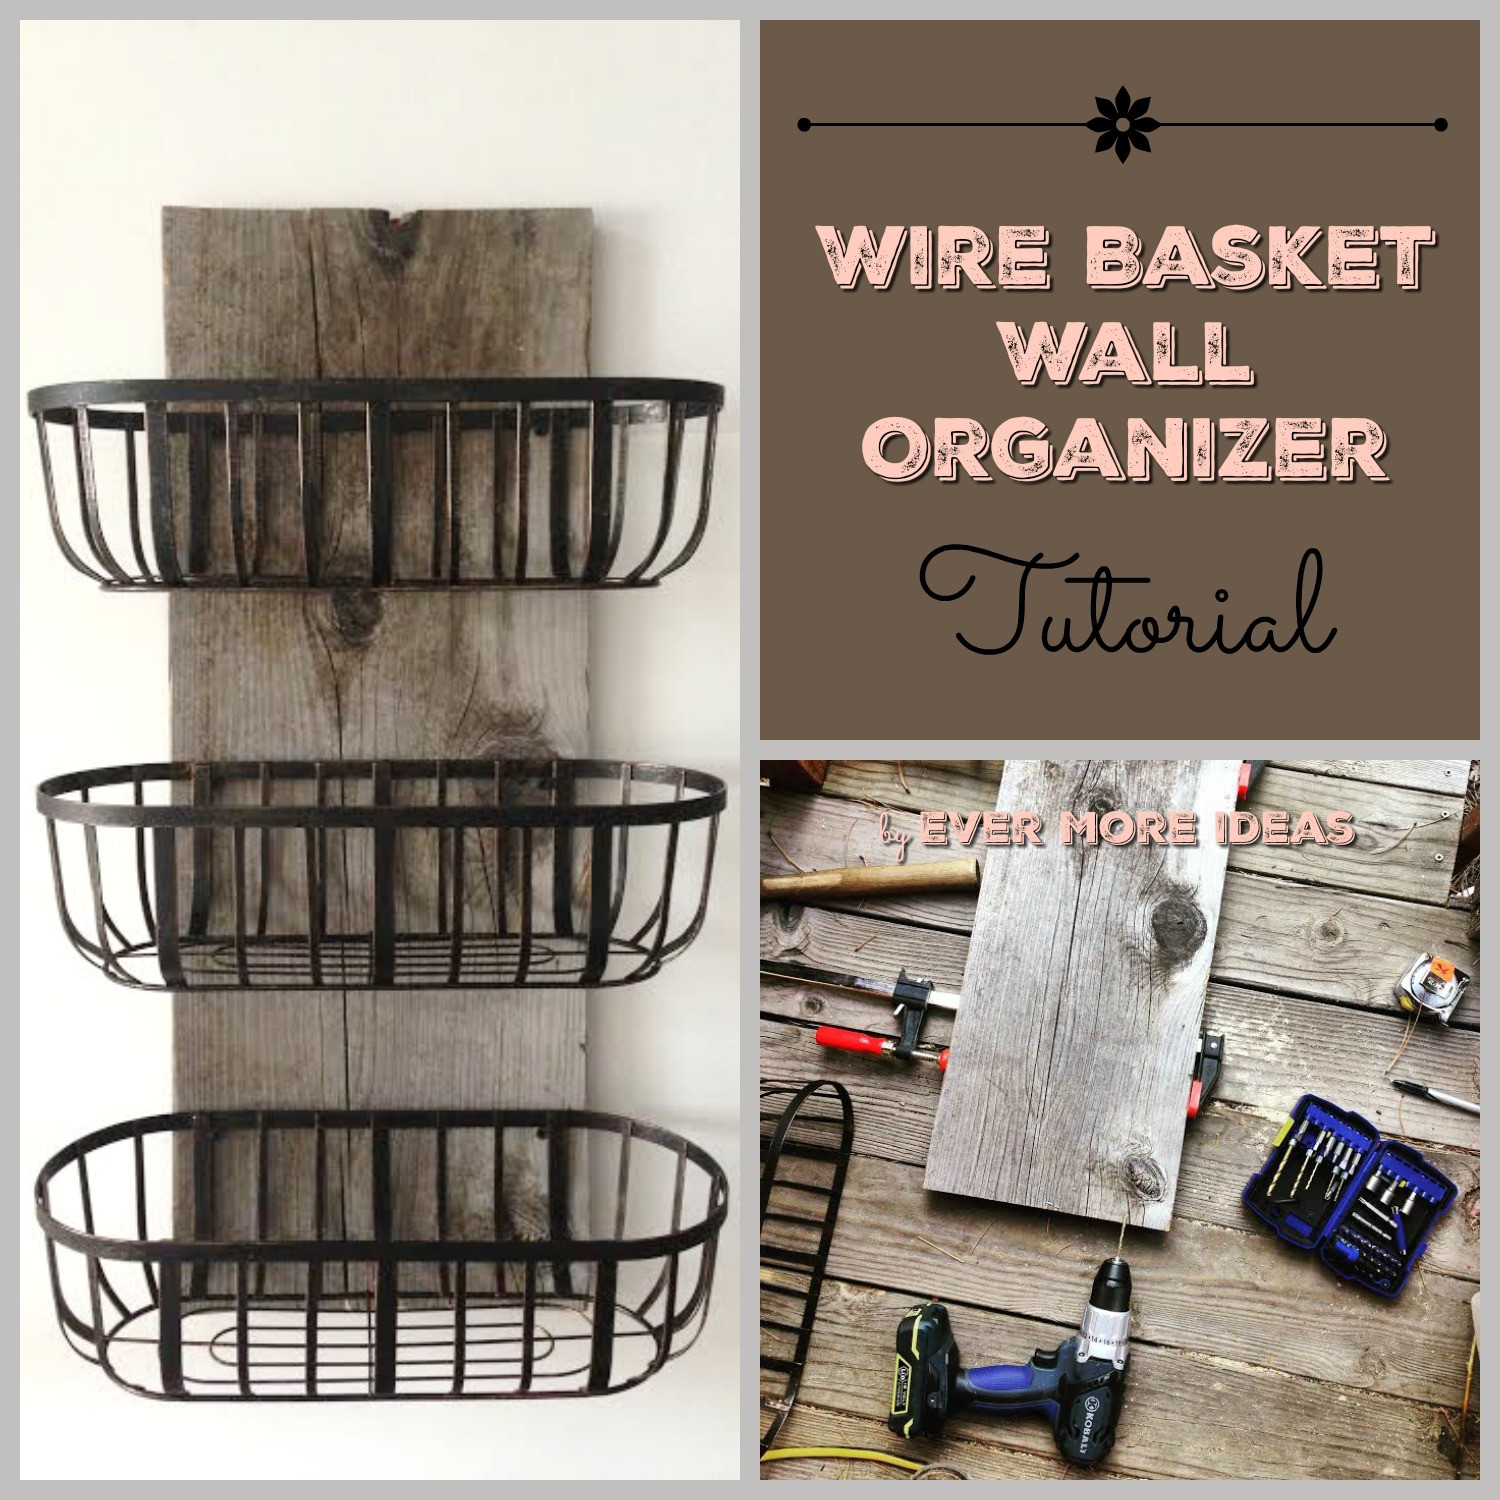 Best ideas about DIY Wire Organizer
. Save or Pin Wire Baskets Organizer DIY Girls Build Club Now.